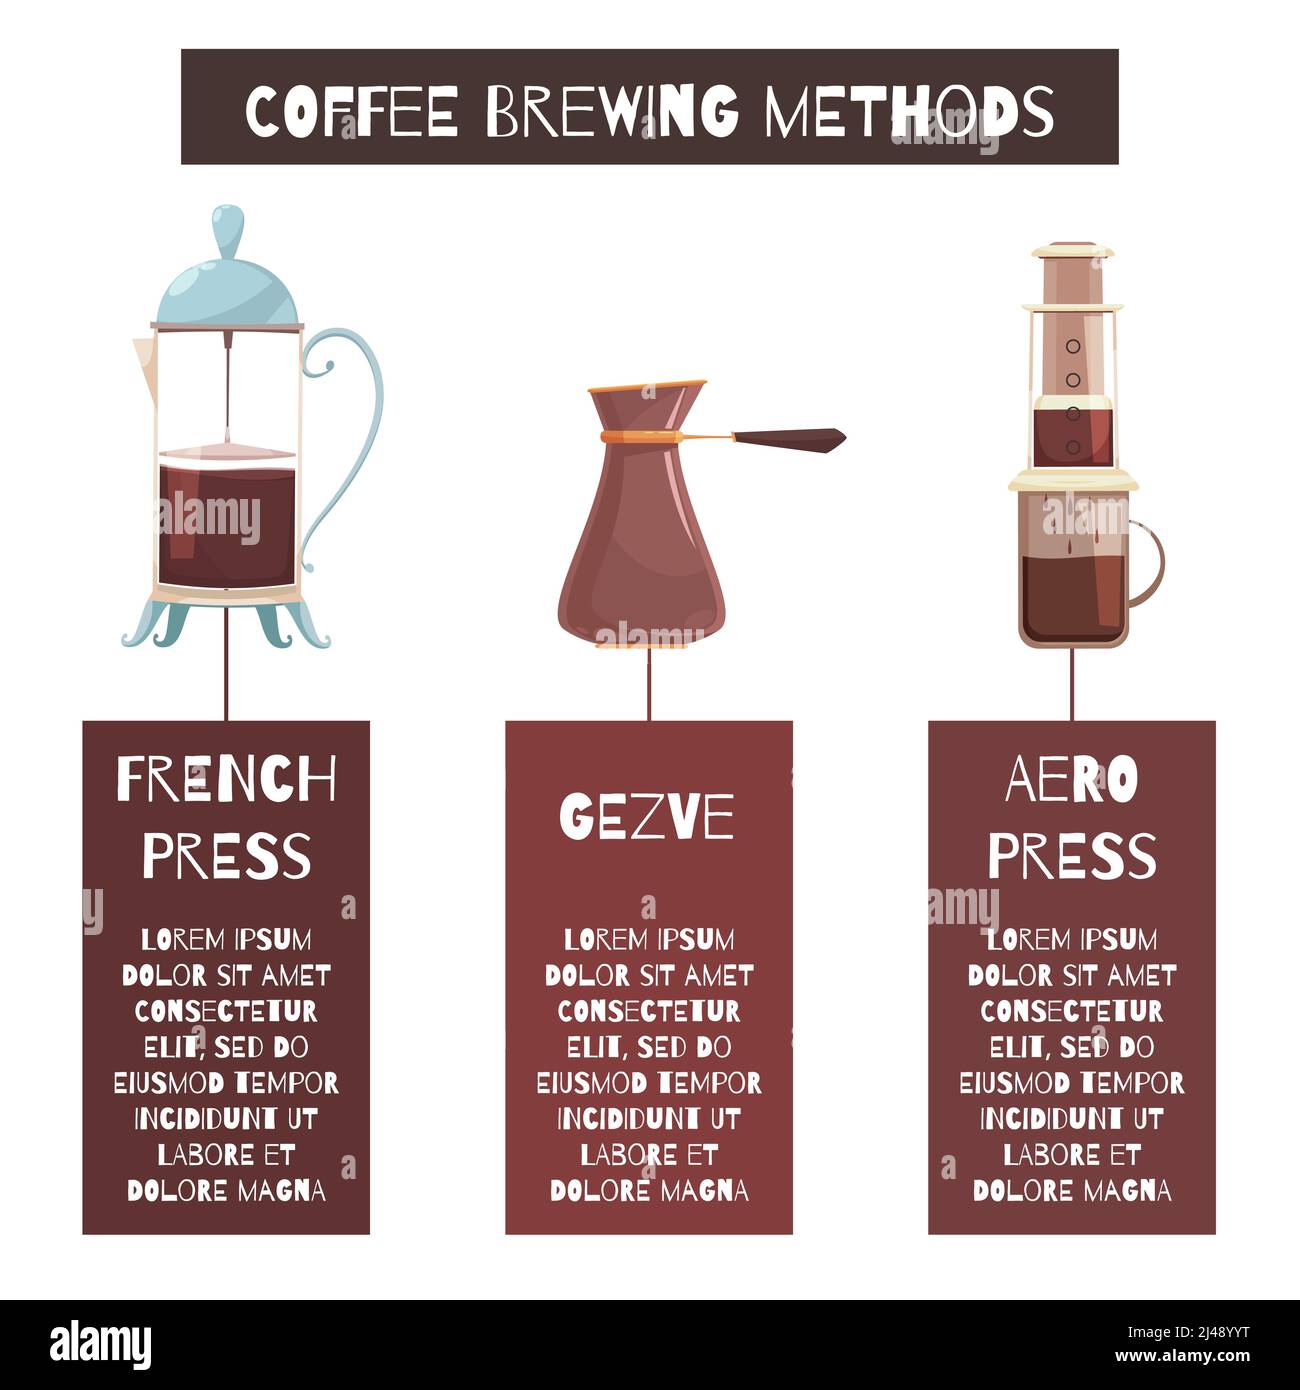 https://c8.alamy.com/comp/2J48YYT/coffee-brewing-methods-design-concept-with-description-of-french-press-cezve-devices-flat-vector-illustration-2J48YYT.jpg